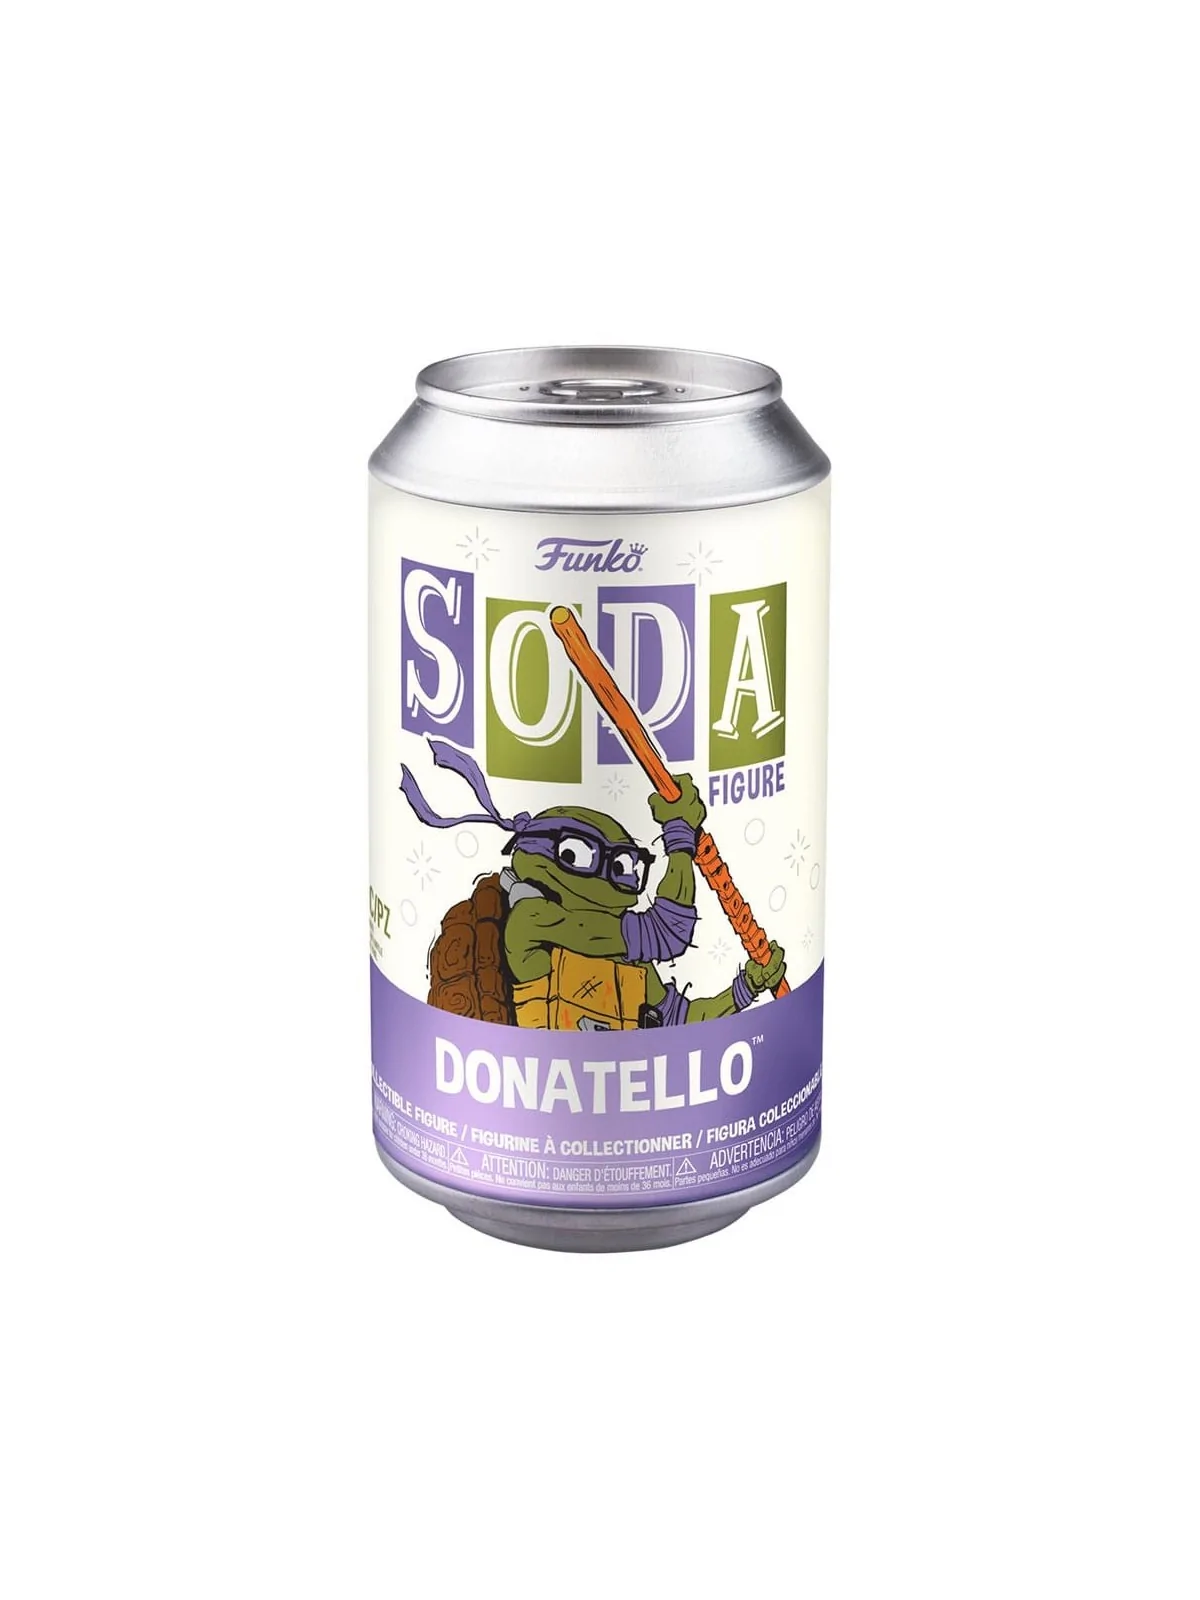 Comprar Funko Soda: Tortugas Ninja - Donatello barato al mejor precio 